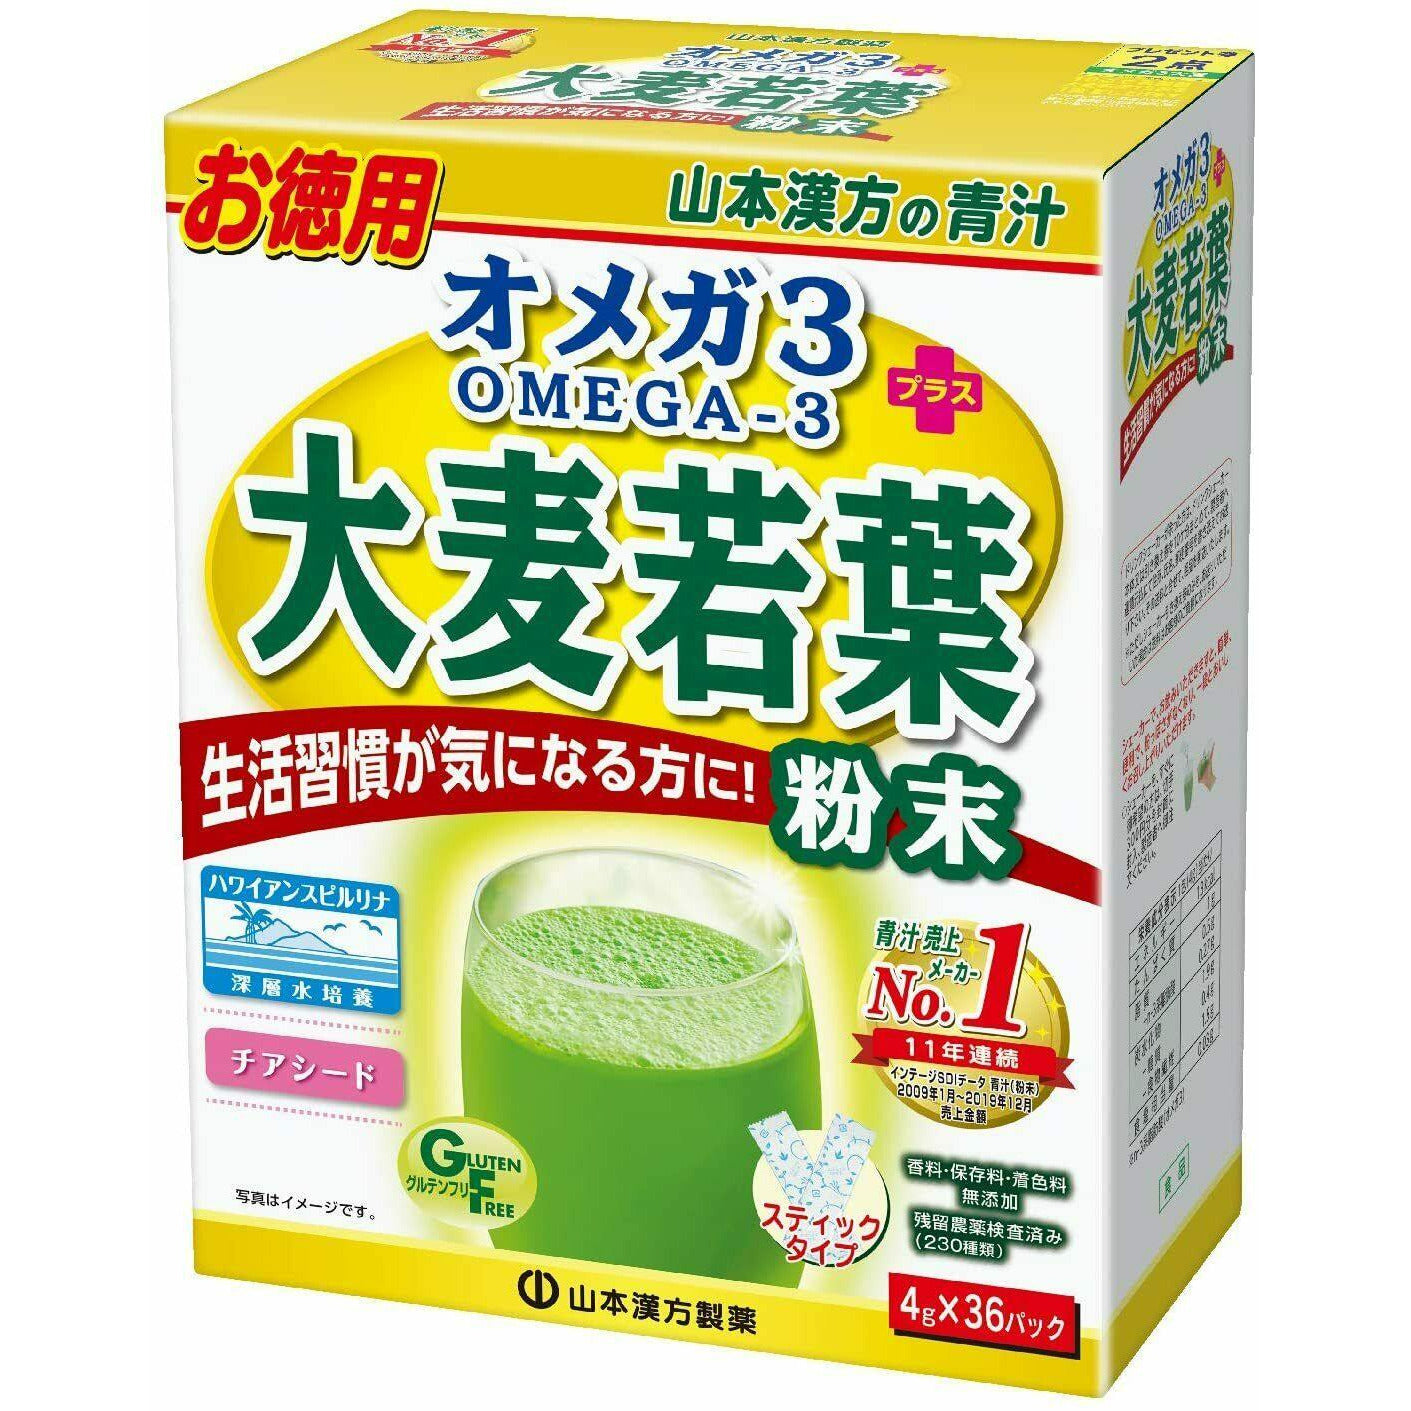  Yamamoto Kanpo Omega 3+ Barley young leaf Powder 4gx36 packets